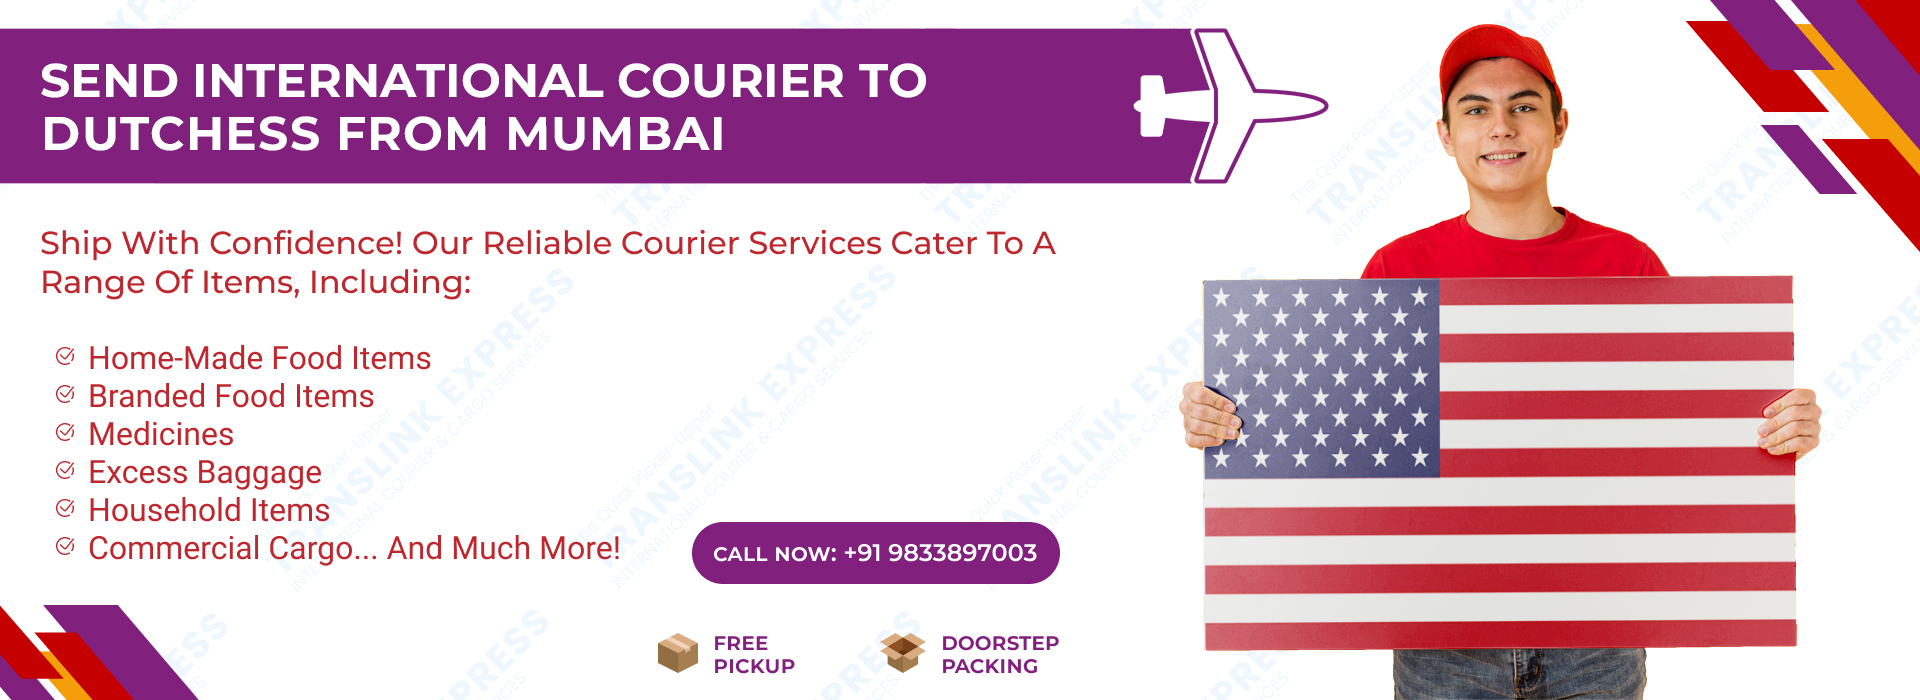 Courier to Dutchess From Mumbai